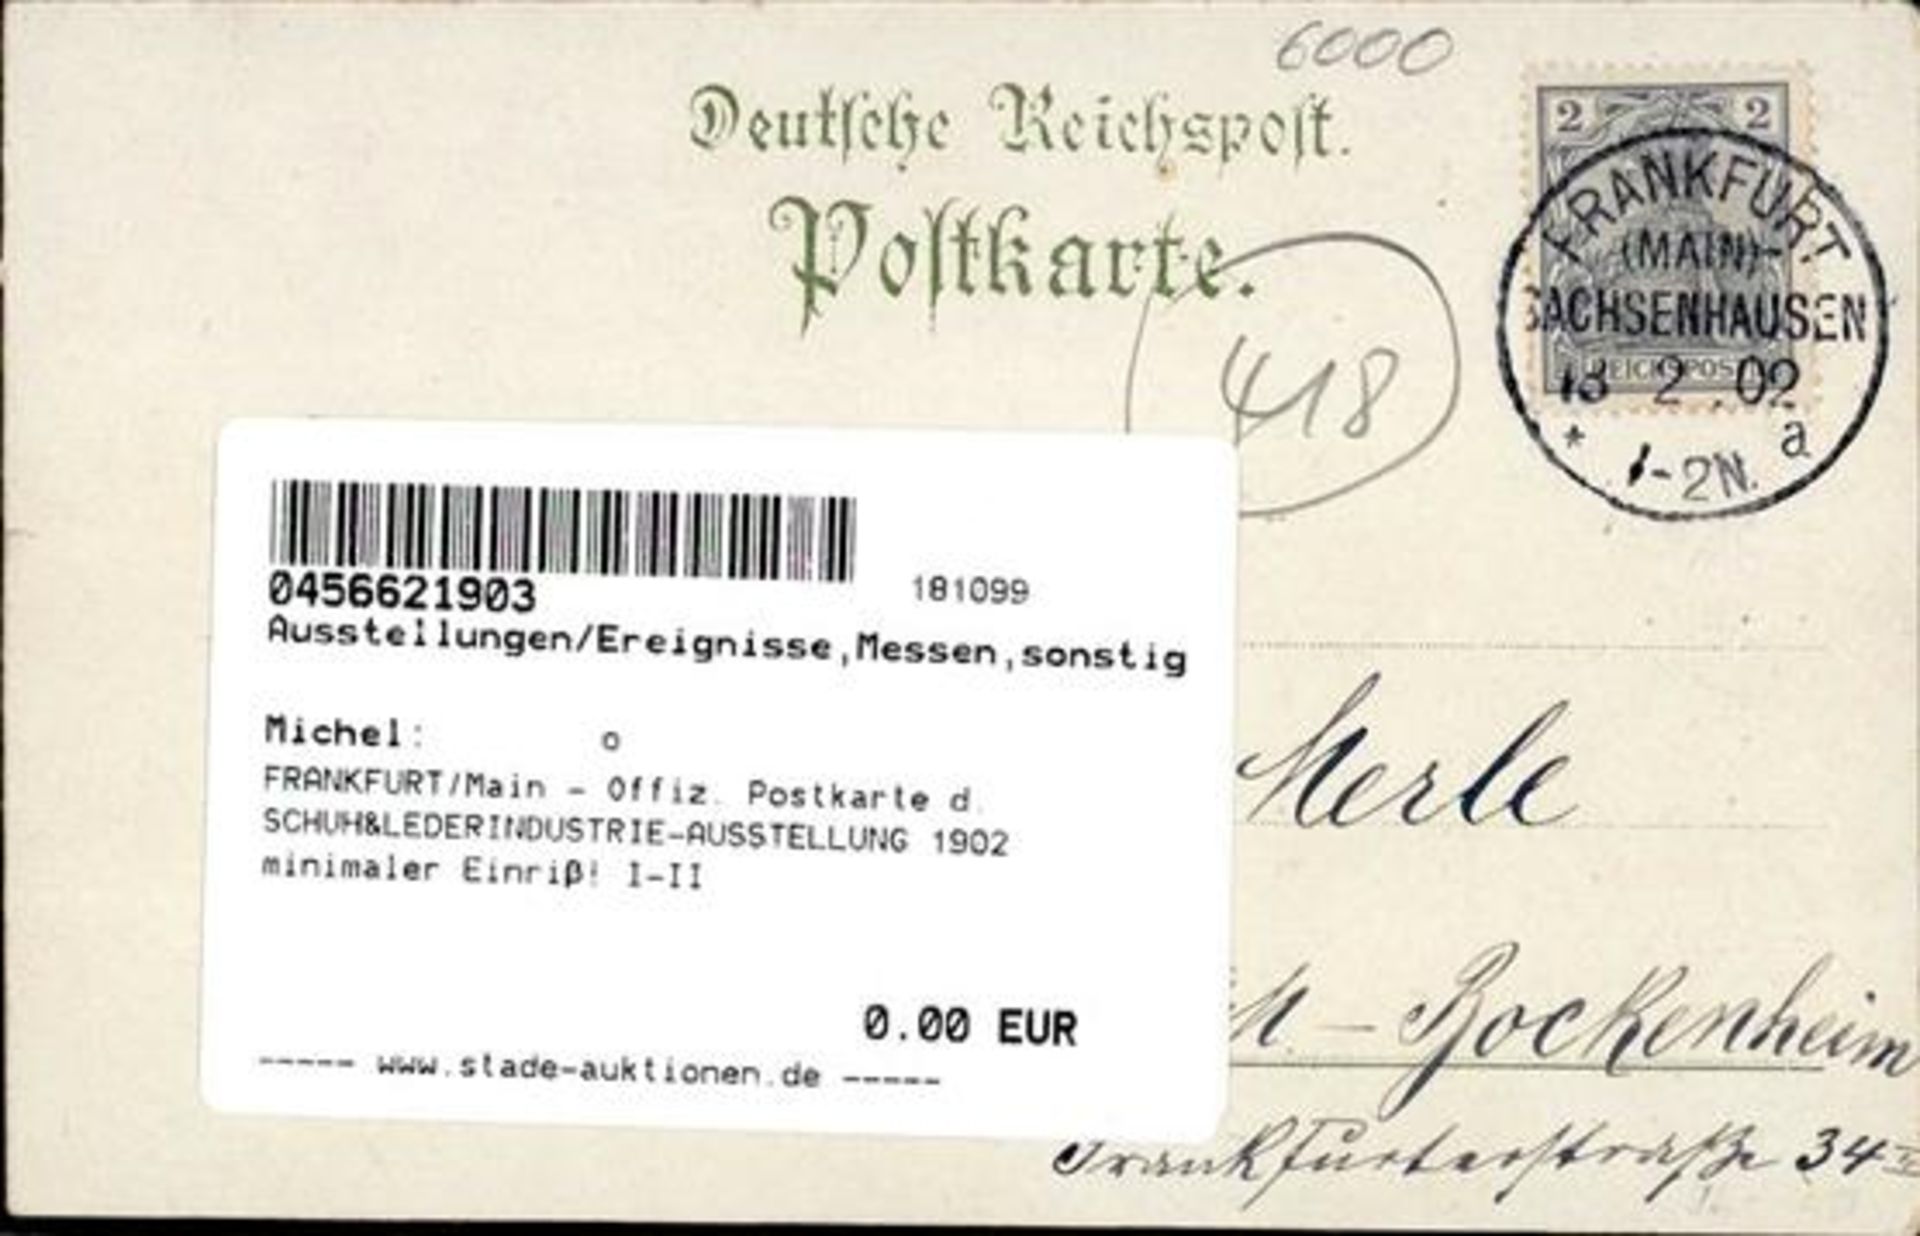 FRANKFURT/Main - Offiz. Postkarte d. SCHUH&LEDERINDUSTRIE-AUSSTELLUNG 1902 minimaler Einriß! I-II - Bild 2 aus 2